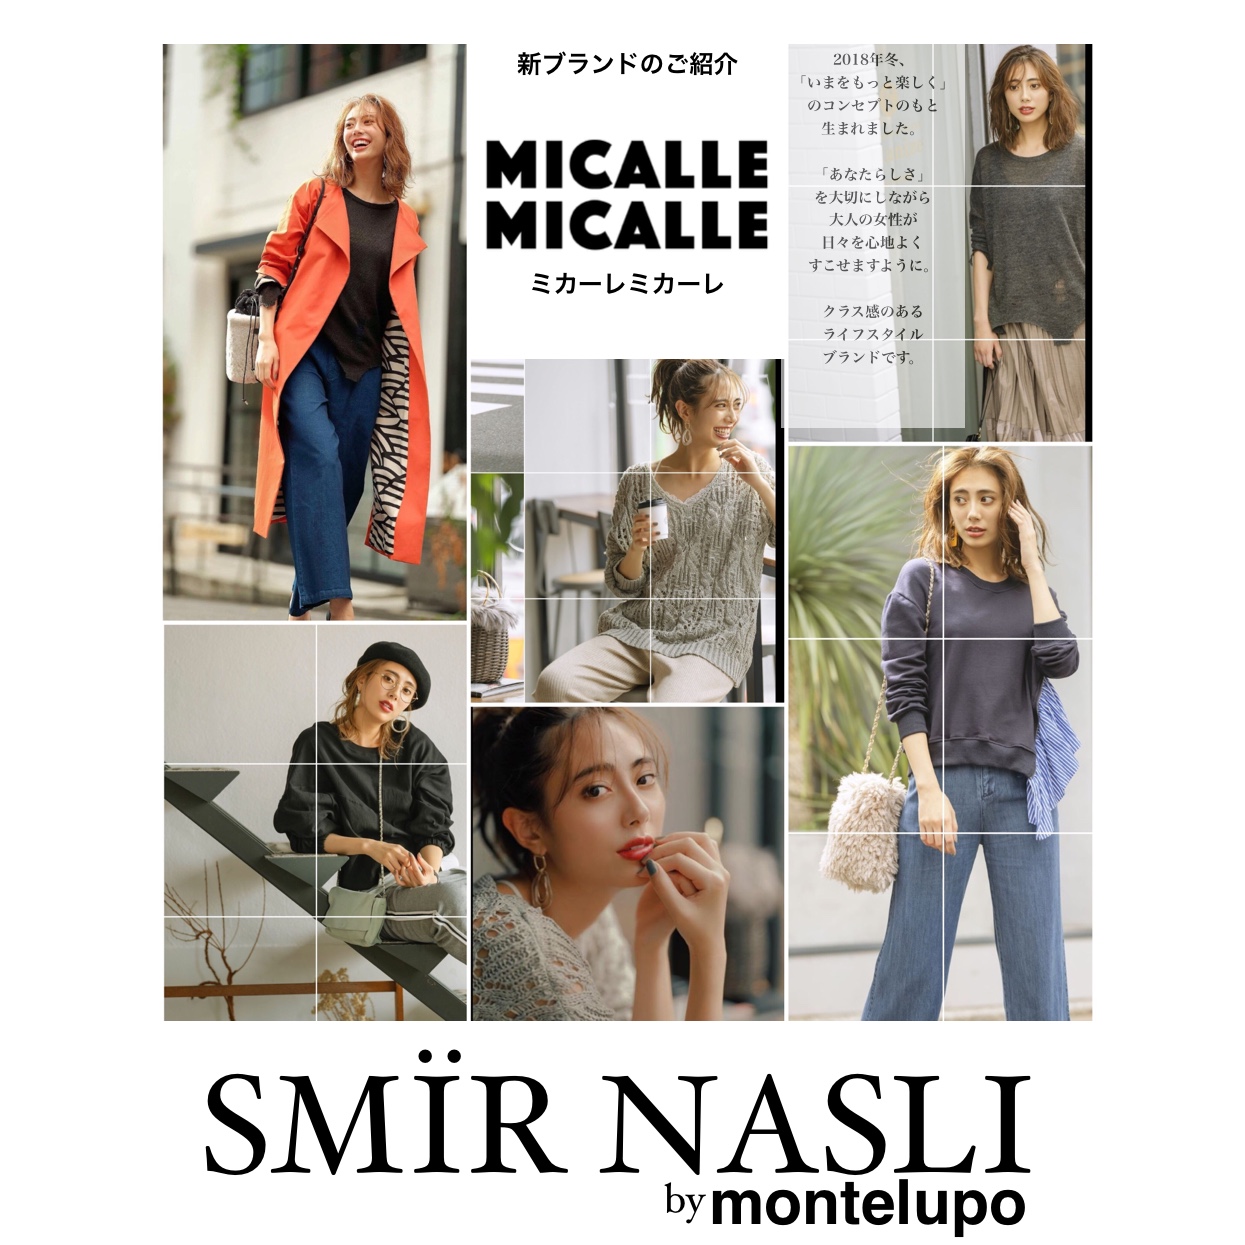 【SAMIR NASLI by montelupo】新ブランド、MICALLE MICALLE(ミカーレミカーレ)<br>の取扱をスタートいたします